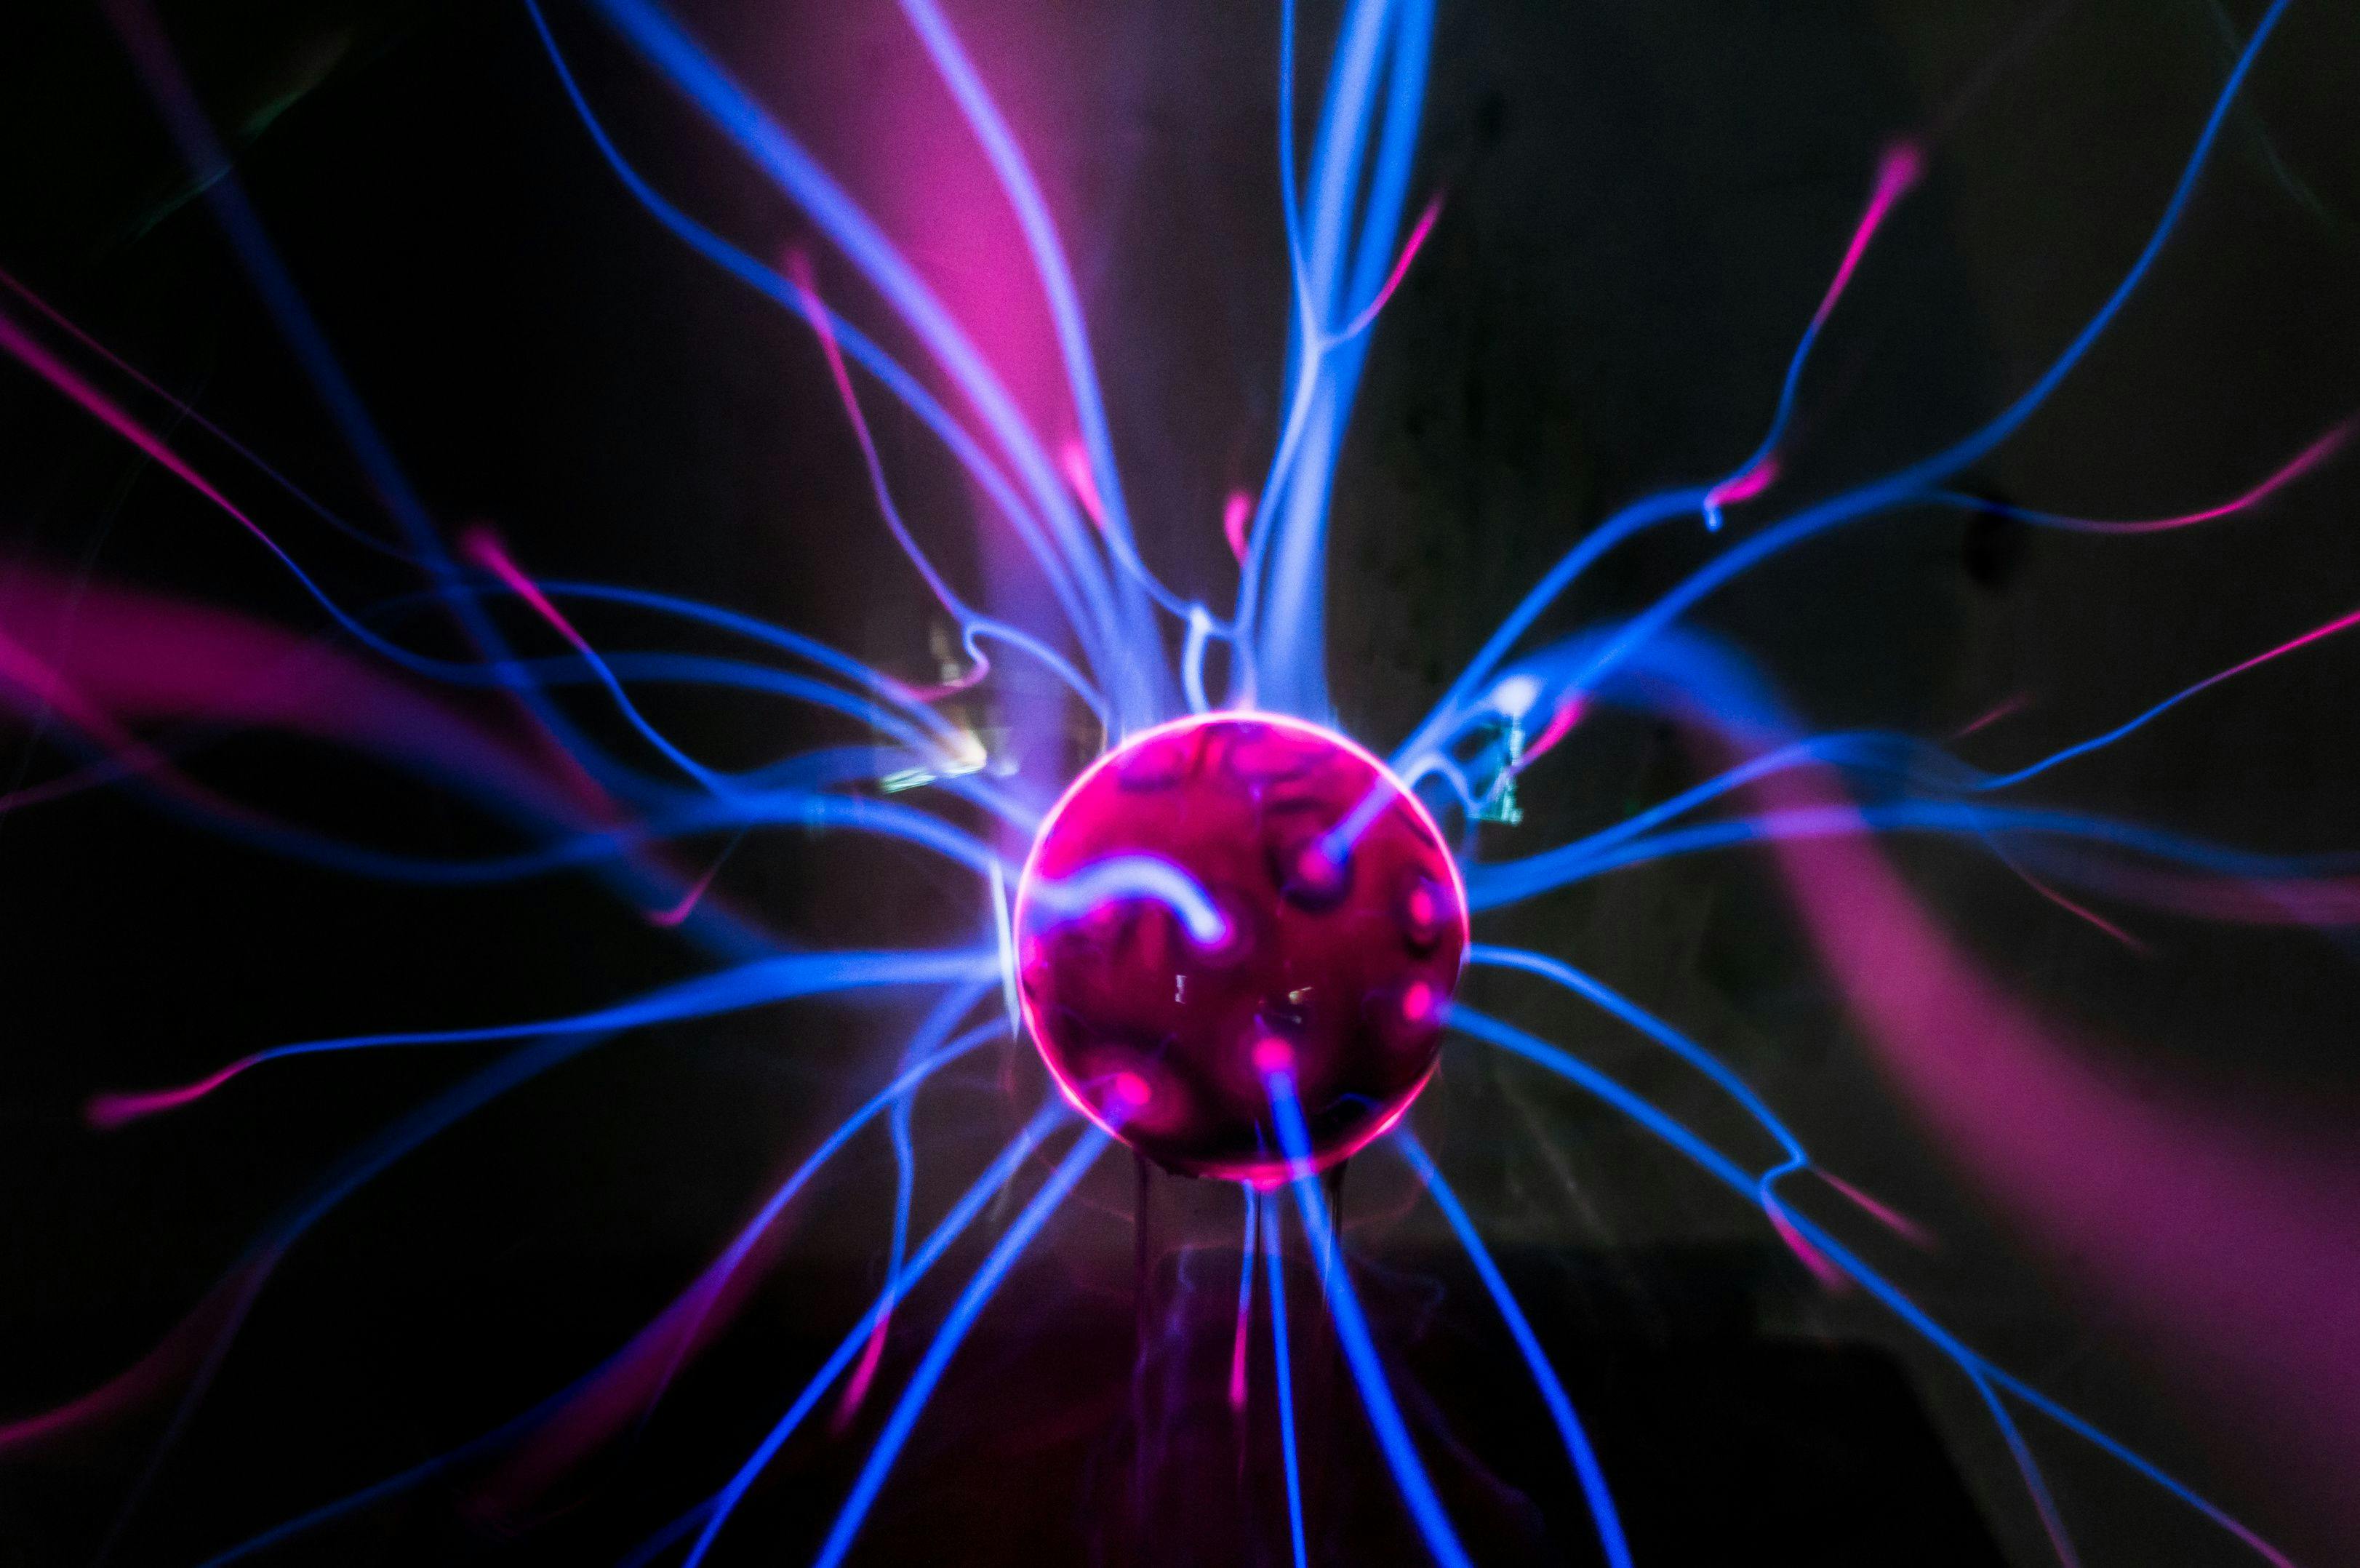 Plasma ball with magenta-blue | Image Credit: © Ruslan Gilmanshin - stock.adobe.com